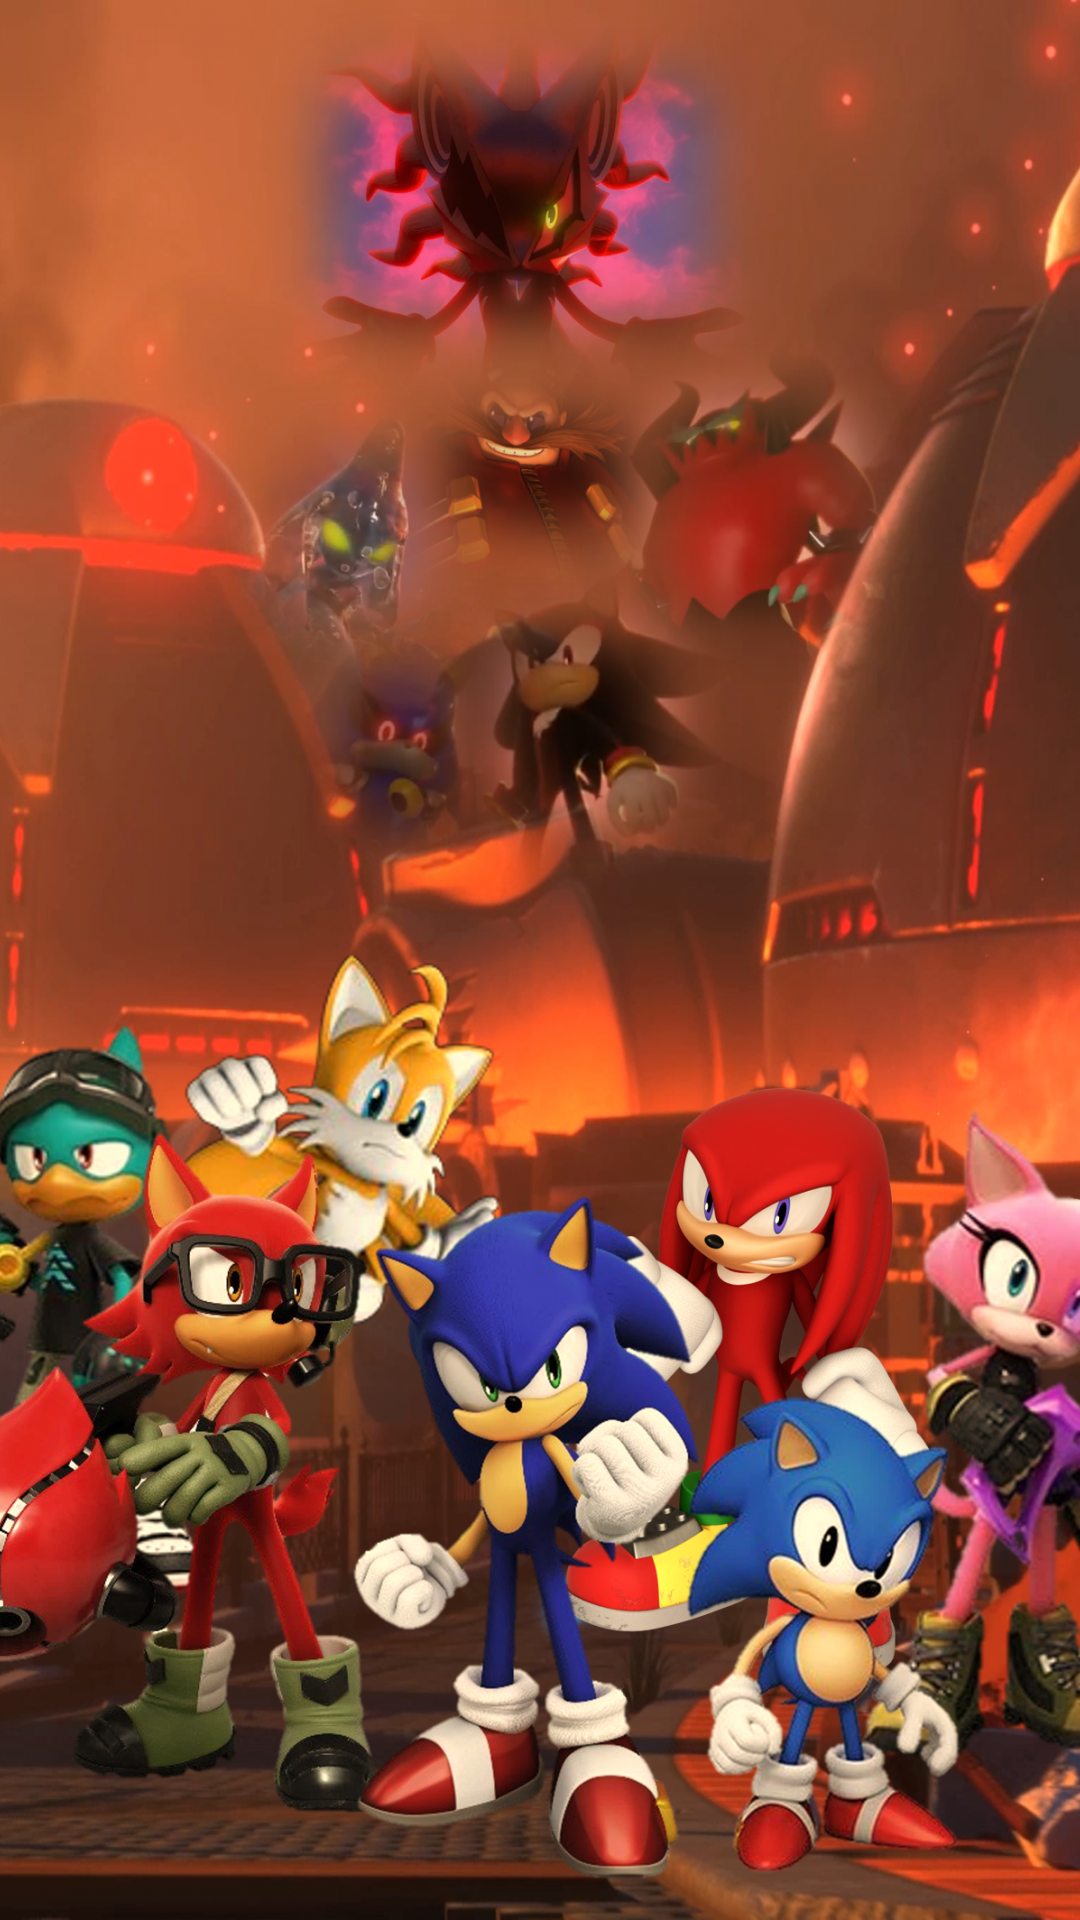 Sonic the hedgehog wallpaper